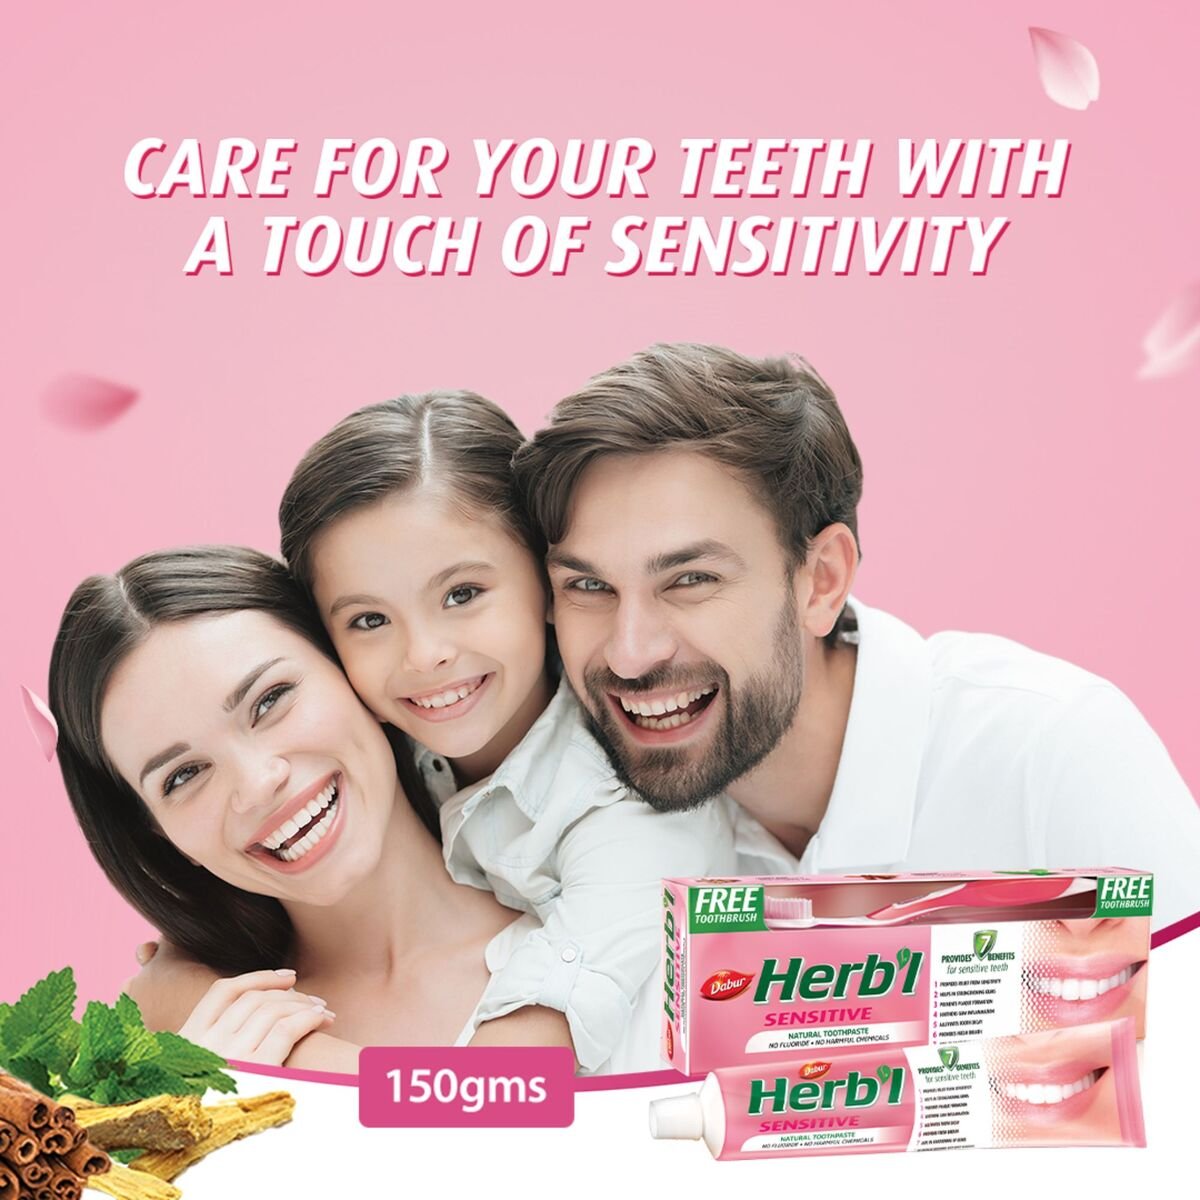 Dabur Herbal Sensitive Toothpaste 150 g